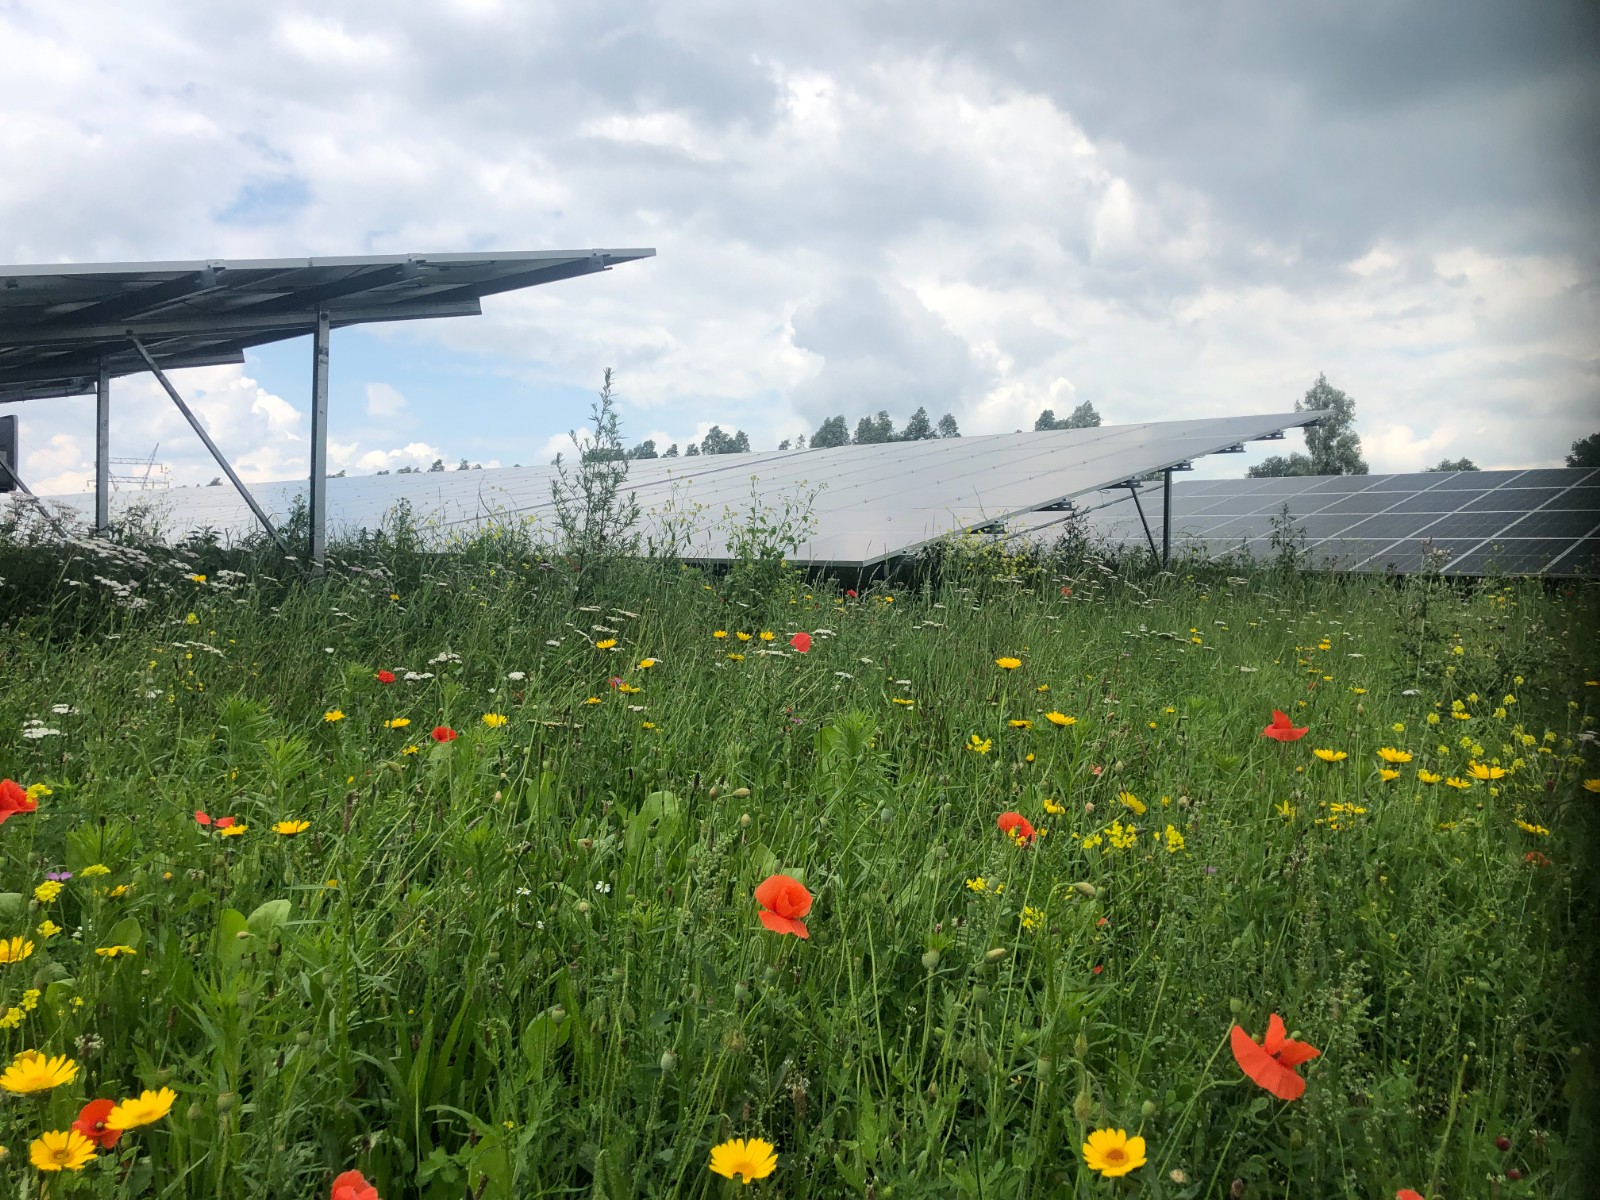 Zonnepark Kijfhoek: duurzame energie en meer natuur